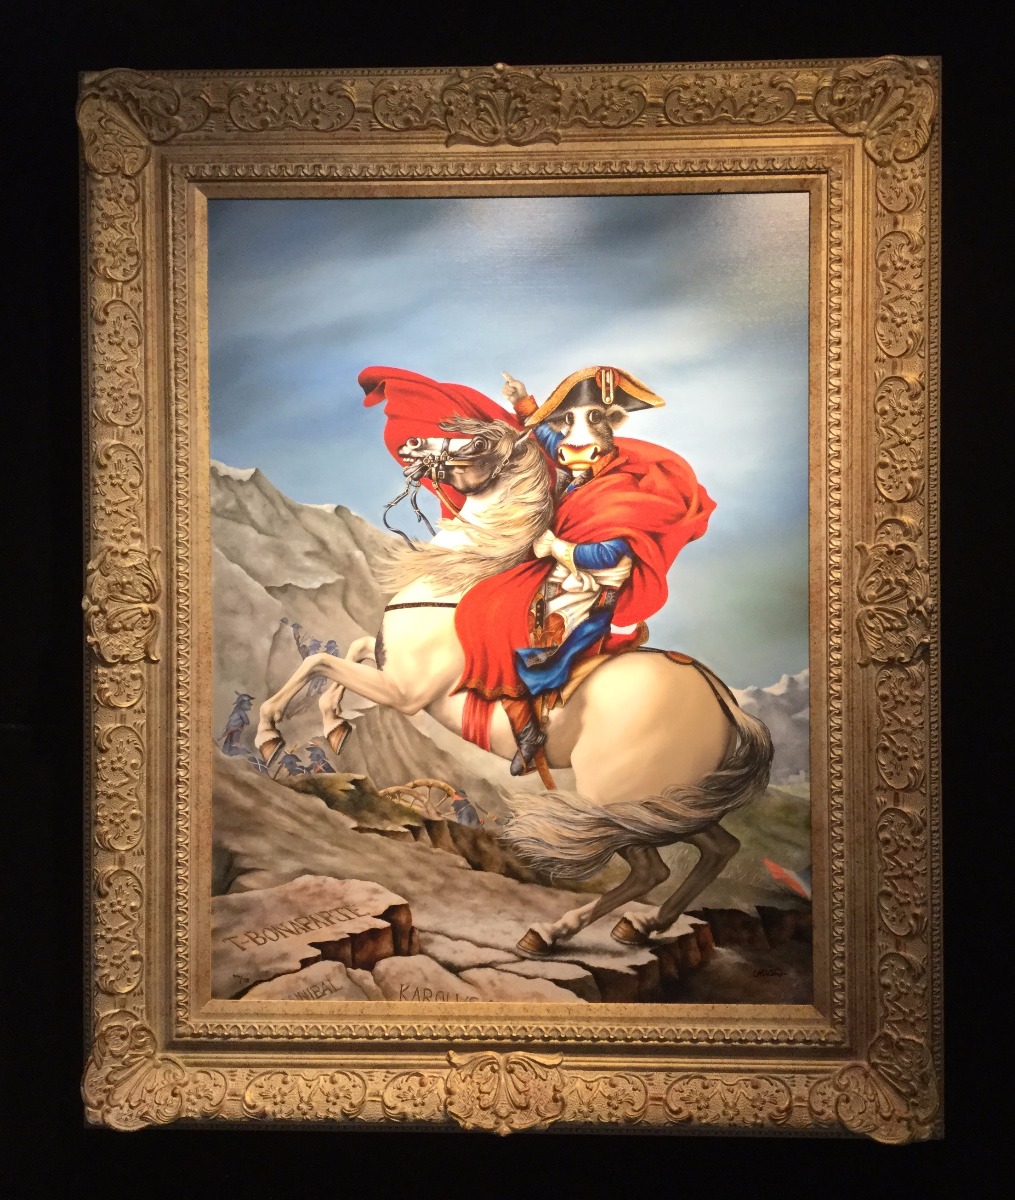 Napoleon T-Bonaparte by Caroline Shotton, Cow | Humour